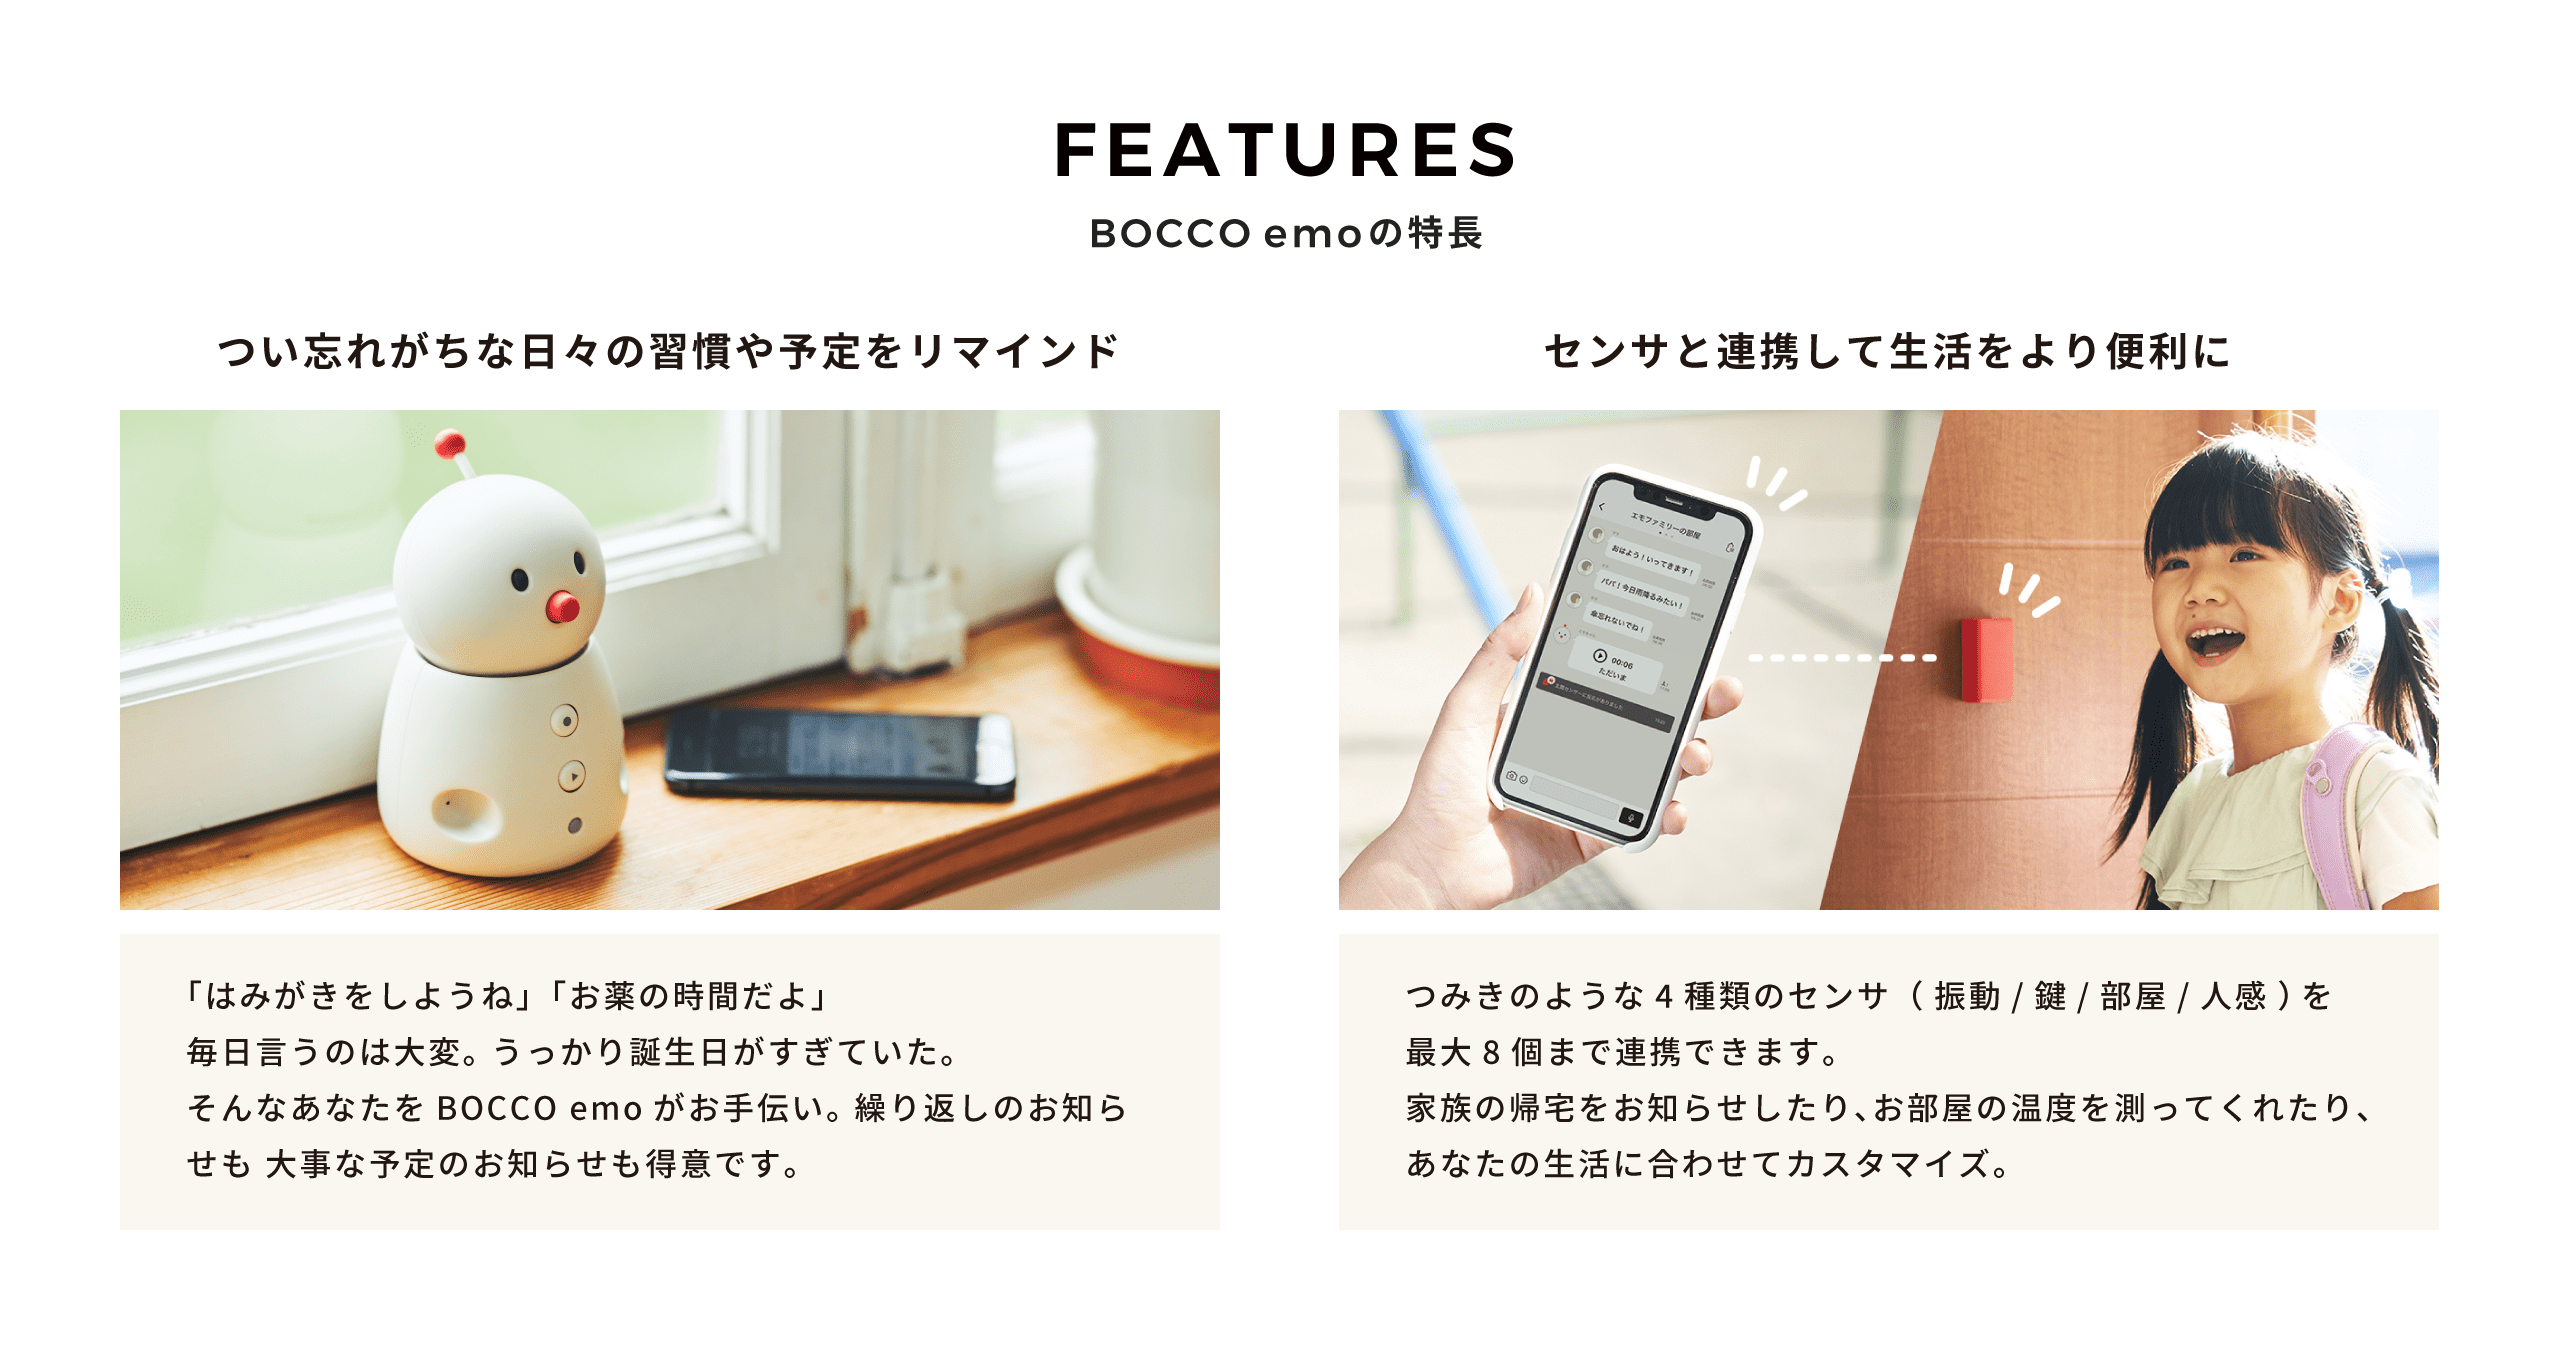 BOCCO emo - b8ta Japan